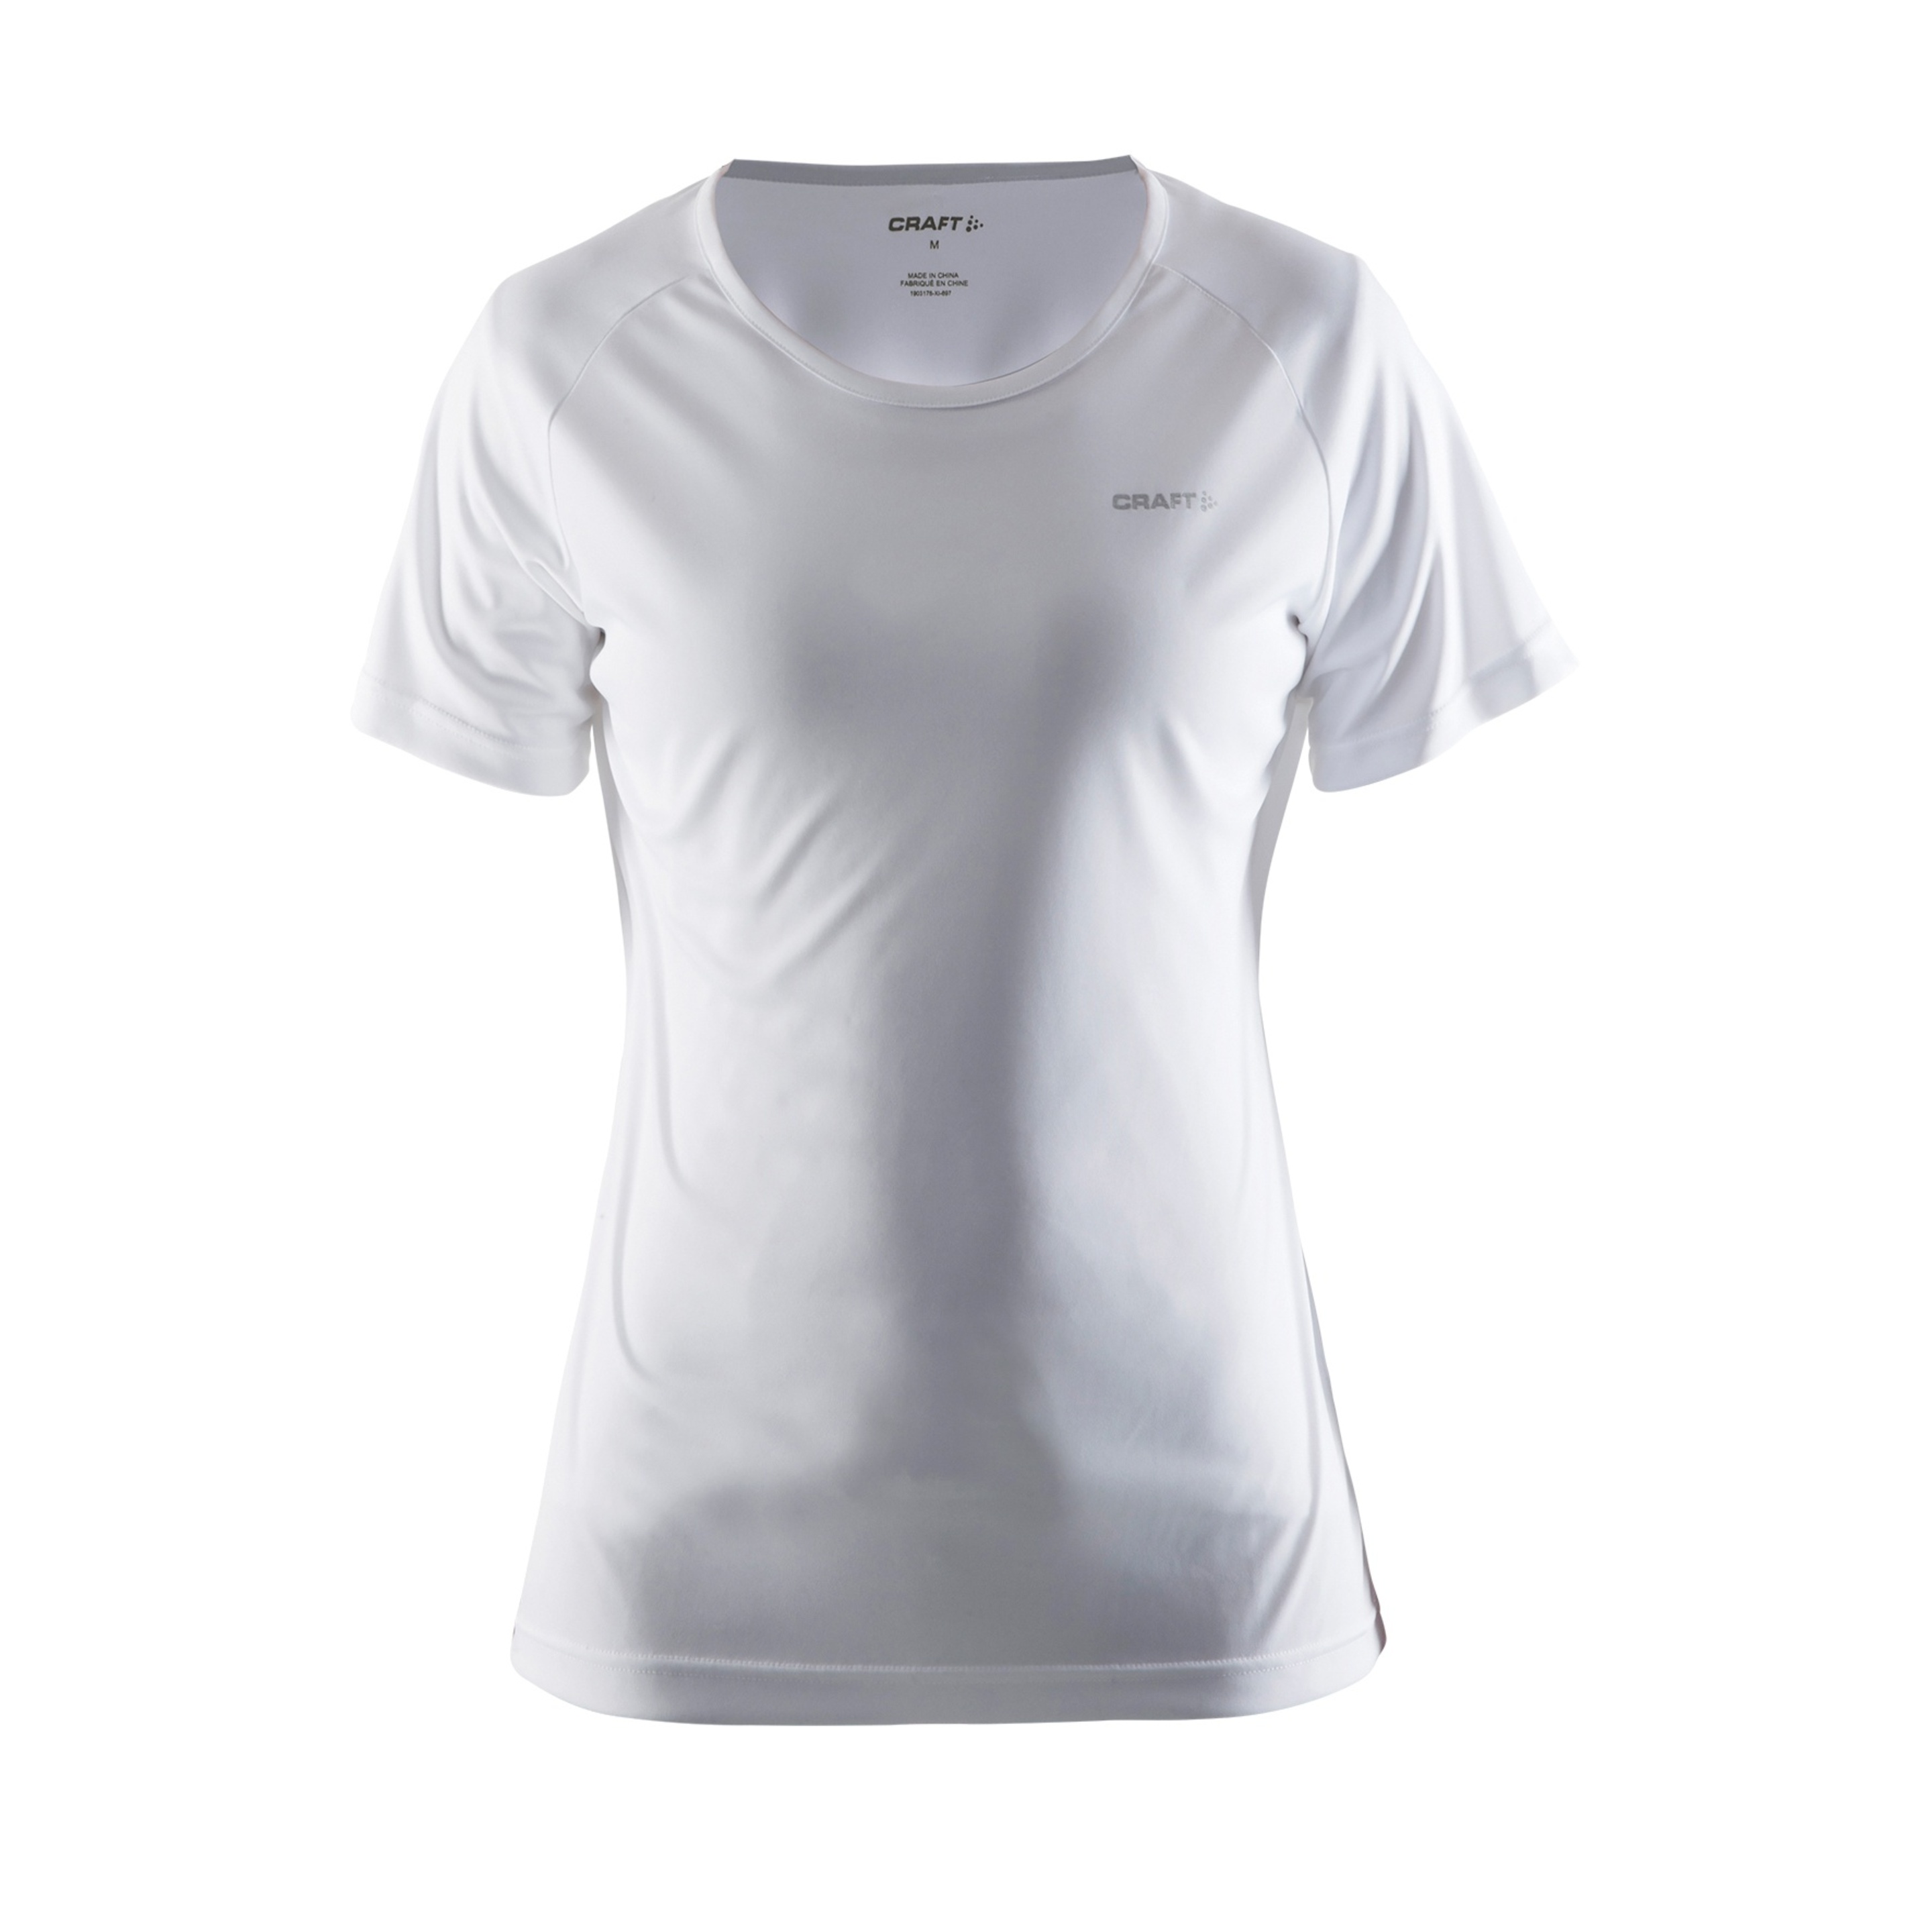 Craft - Camiseta De Manga Corta Deportiva Y Ligera Modelo Prime Para Mujer (Blanco)